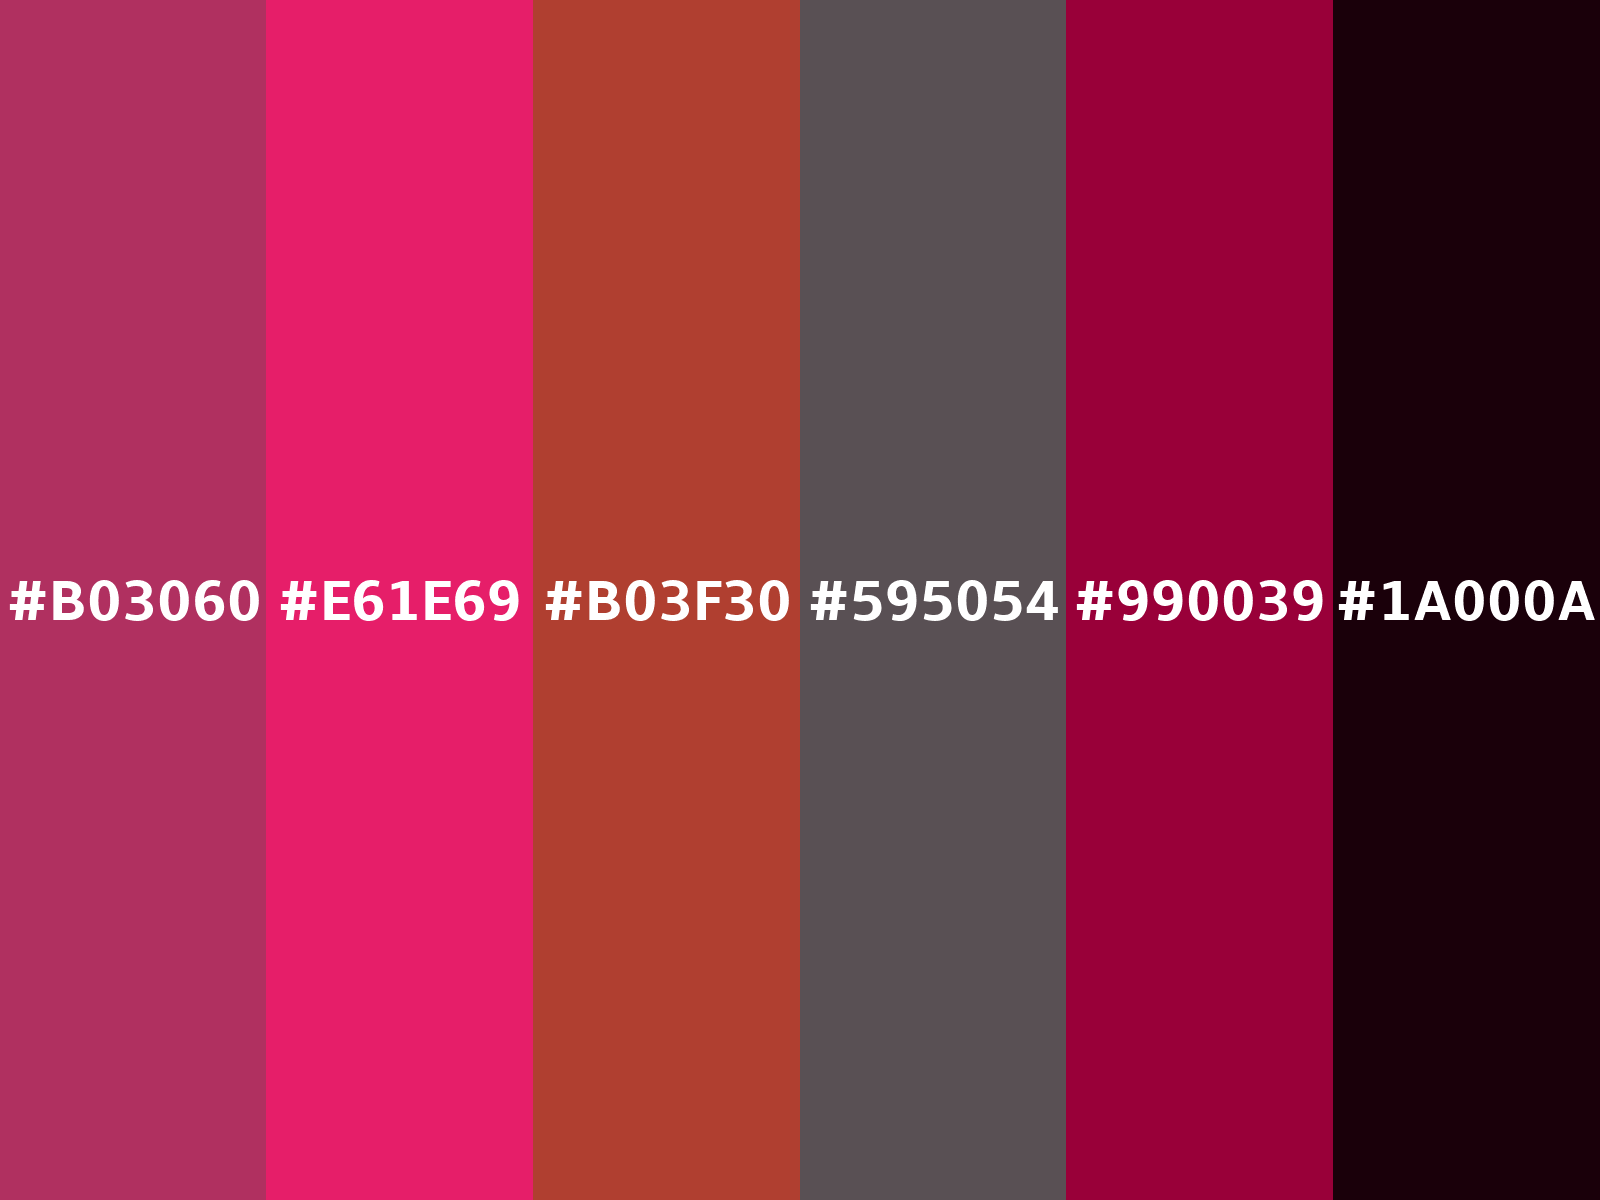 colorswall on X: Shades X11 color Dark Magenta #8B008B hex #7d007d,  #6f006f, #610061, #530053, #460046, #380038, #2a002a, #1c001c, #0e000e,  #000000 #colors #palette   /  X